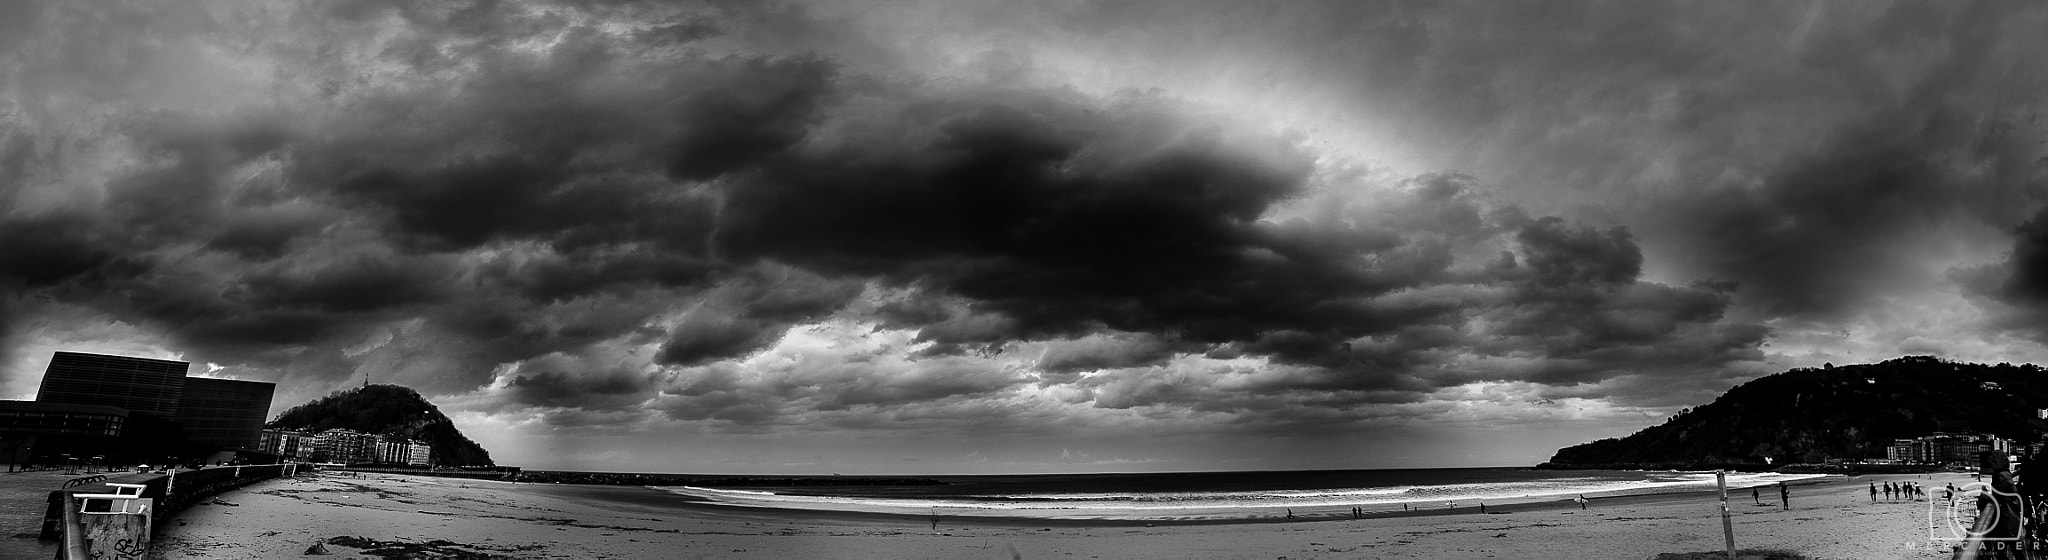 Tamron SP AF 17-35mm F2.8-4 Di LD Aspherical (IF) sample photo. Basque beach storm (zurriola beach) san sebastian photography